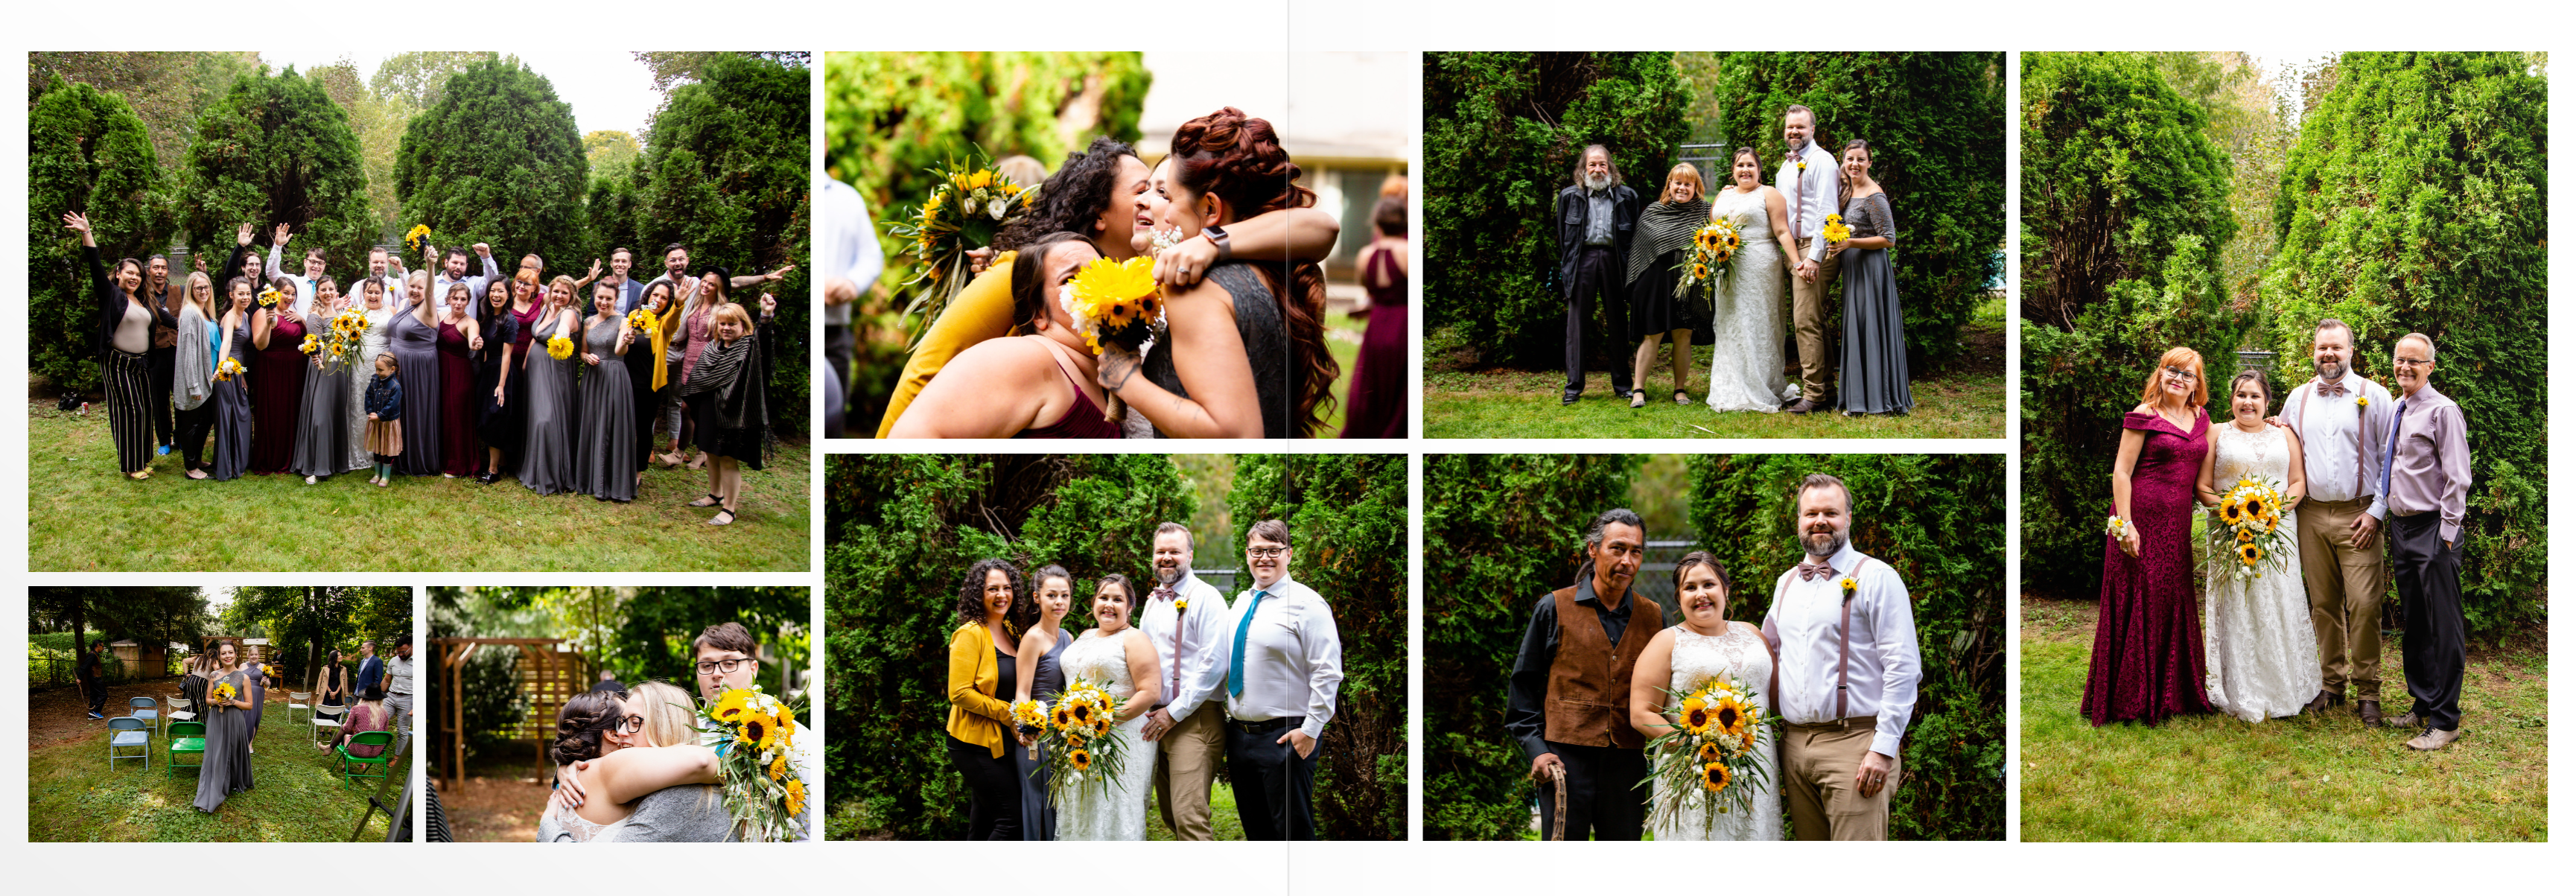 London Ontario backyard Wedding Photography celebration